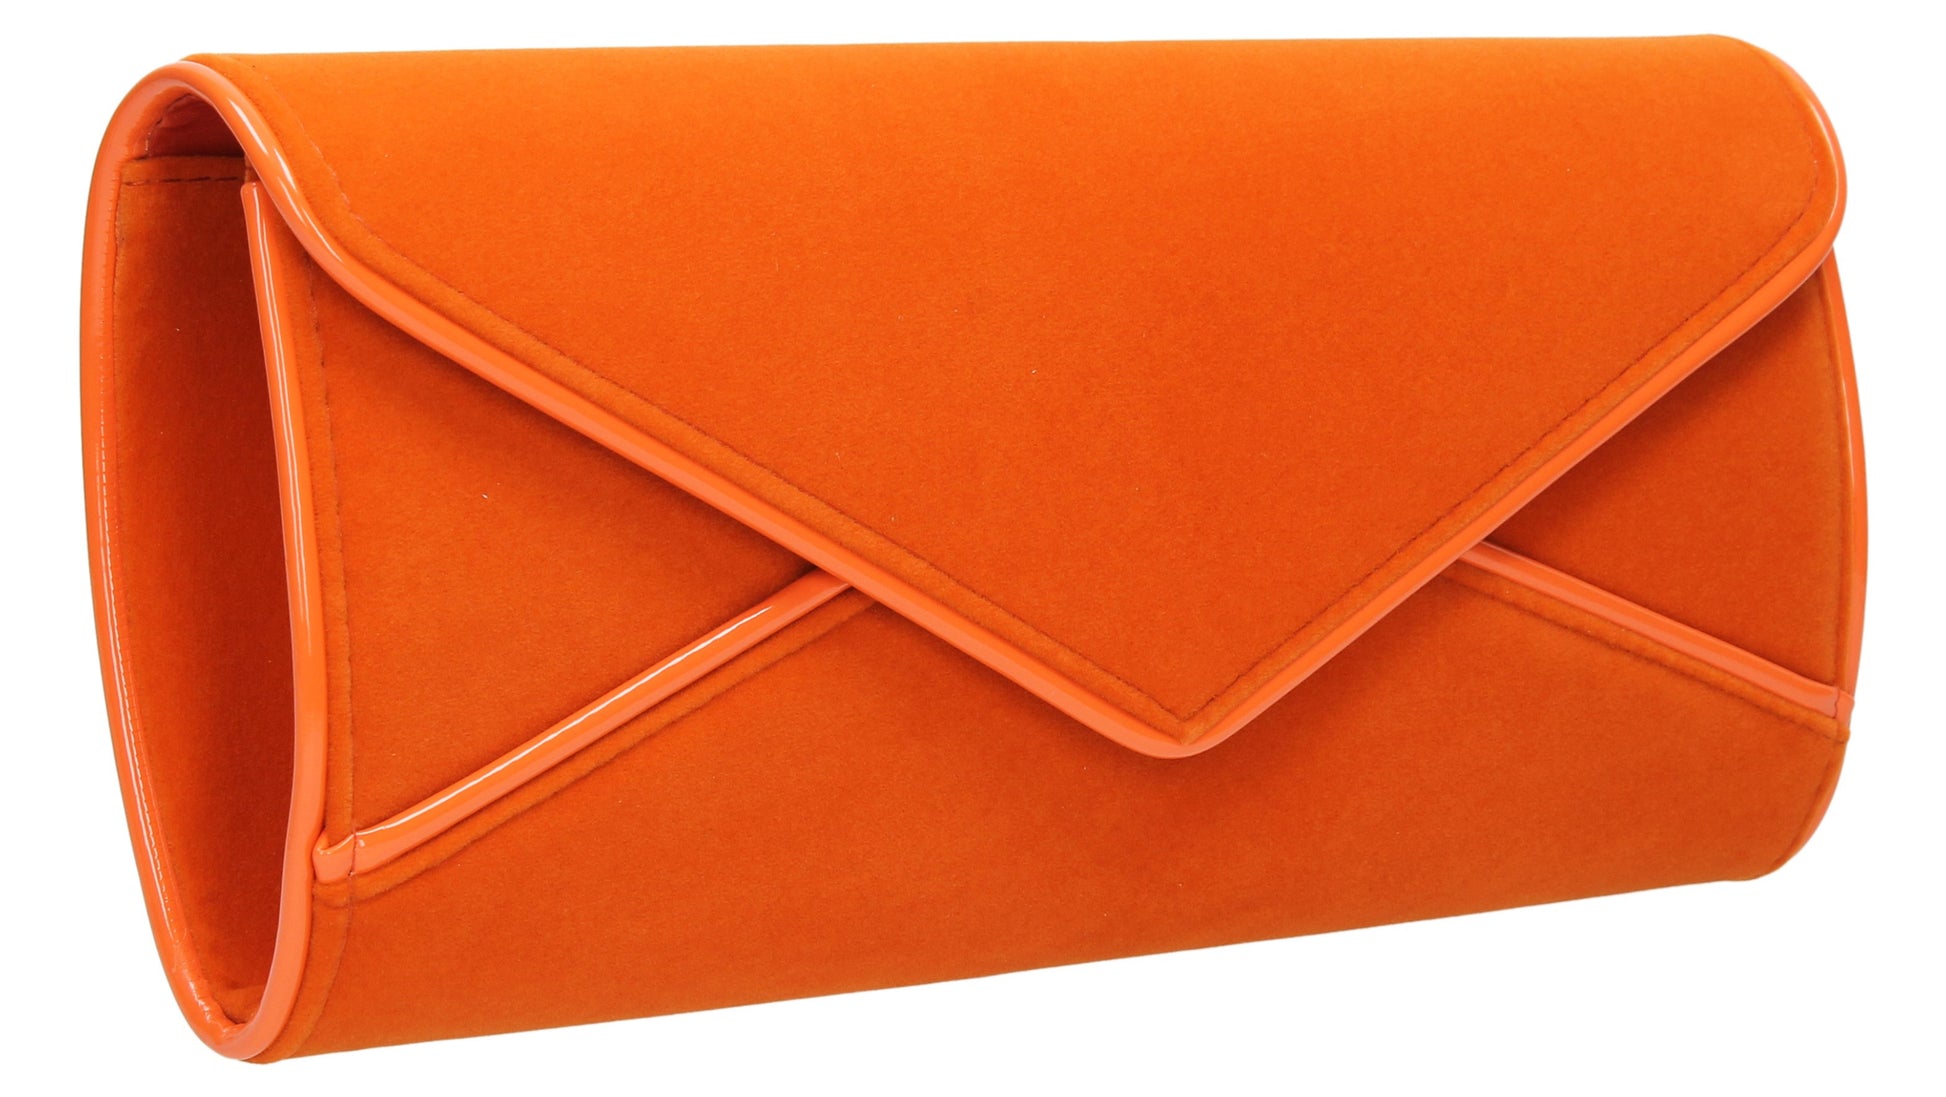 SWANKYSWANS Perry Velvet Clutch Bag - Orange Cute Cheap Clutch Bag For Weddings School and Work